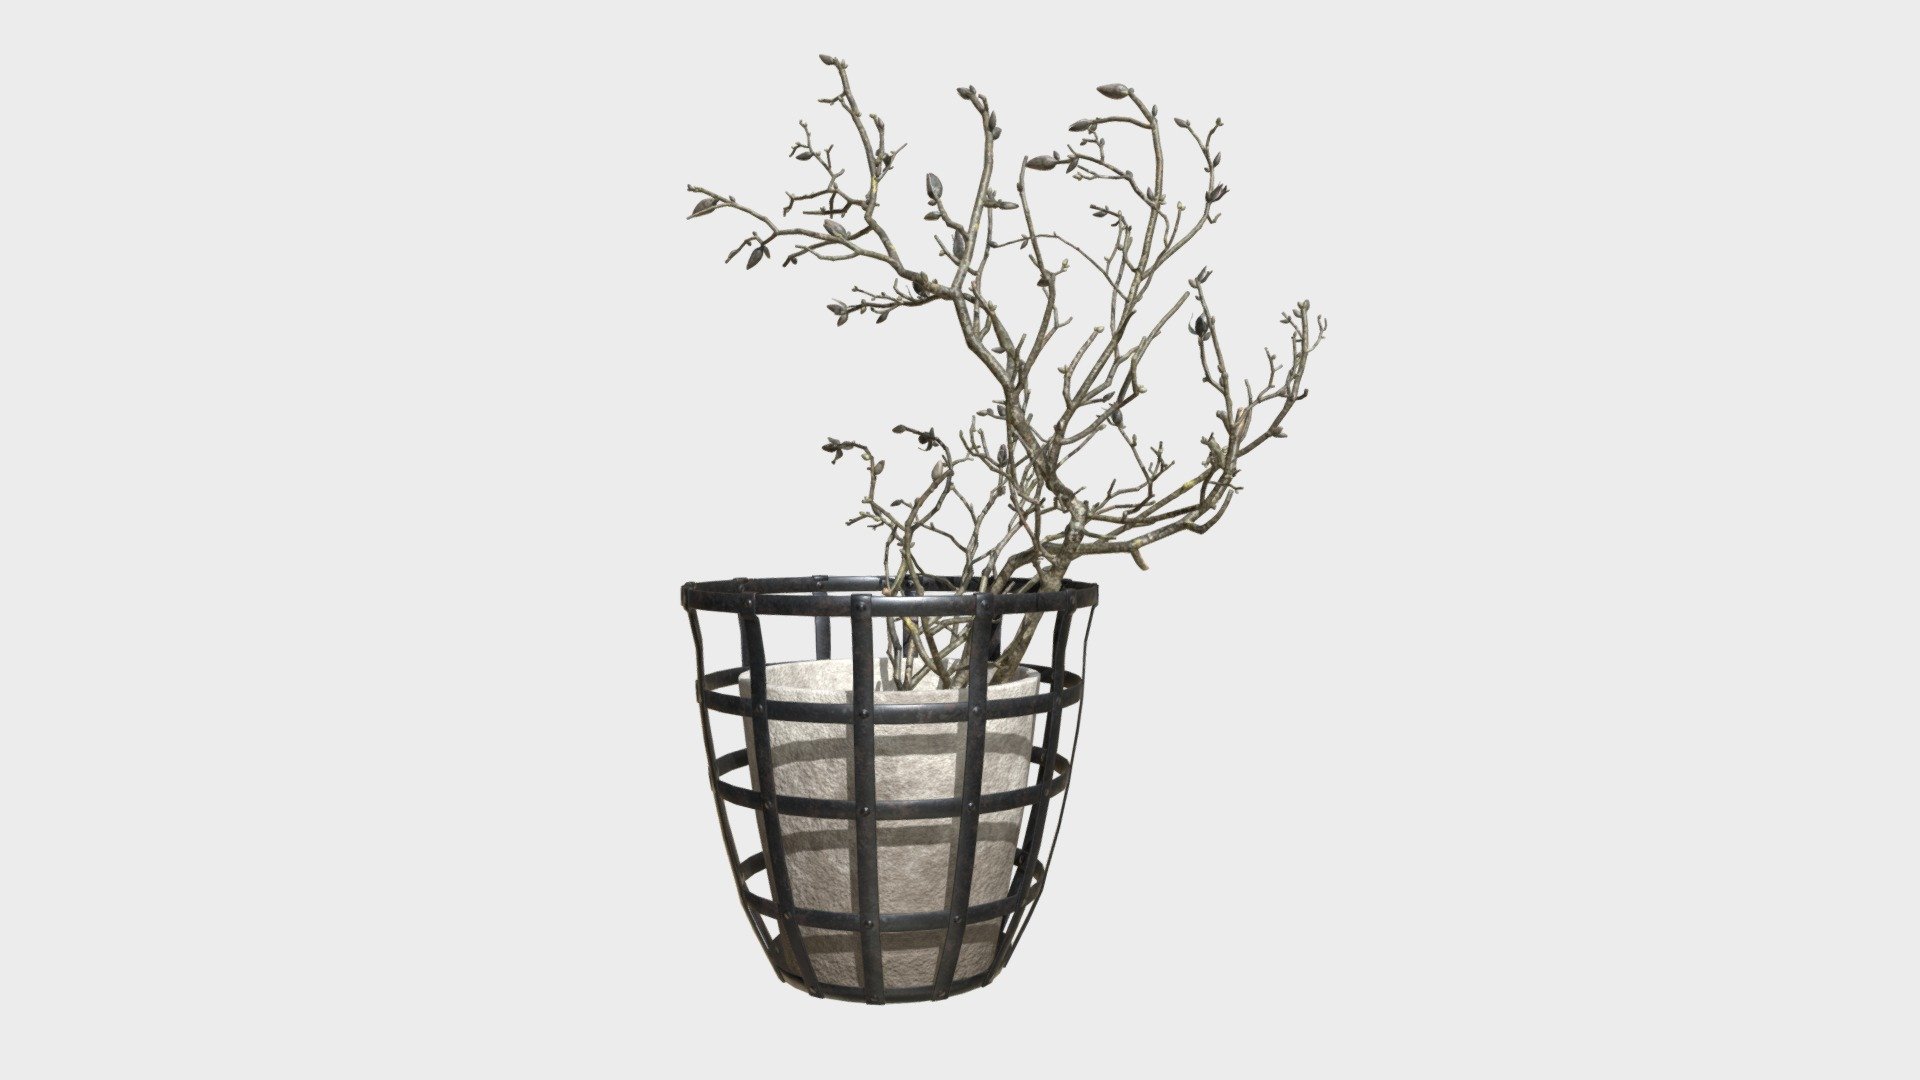 3d model decor branch dry magnolia.
created Blender Version 2.79 - Decor branch dry magnolia - 3D model by Wazzabi 3d model